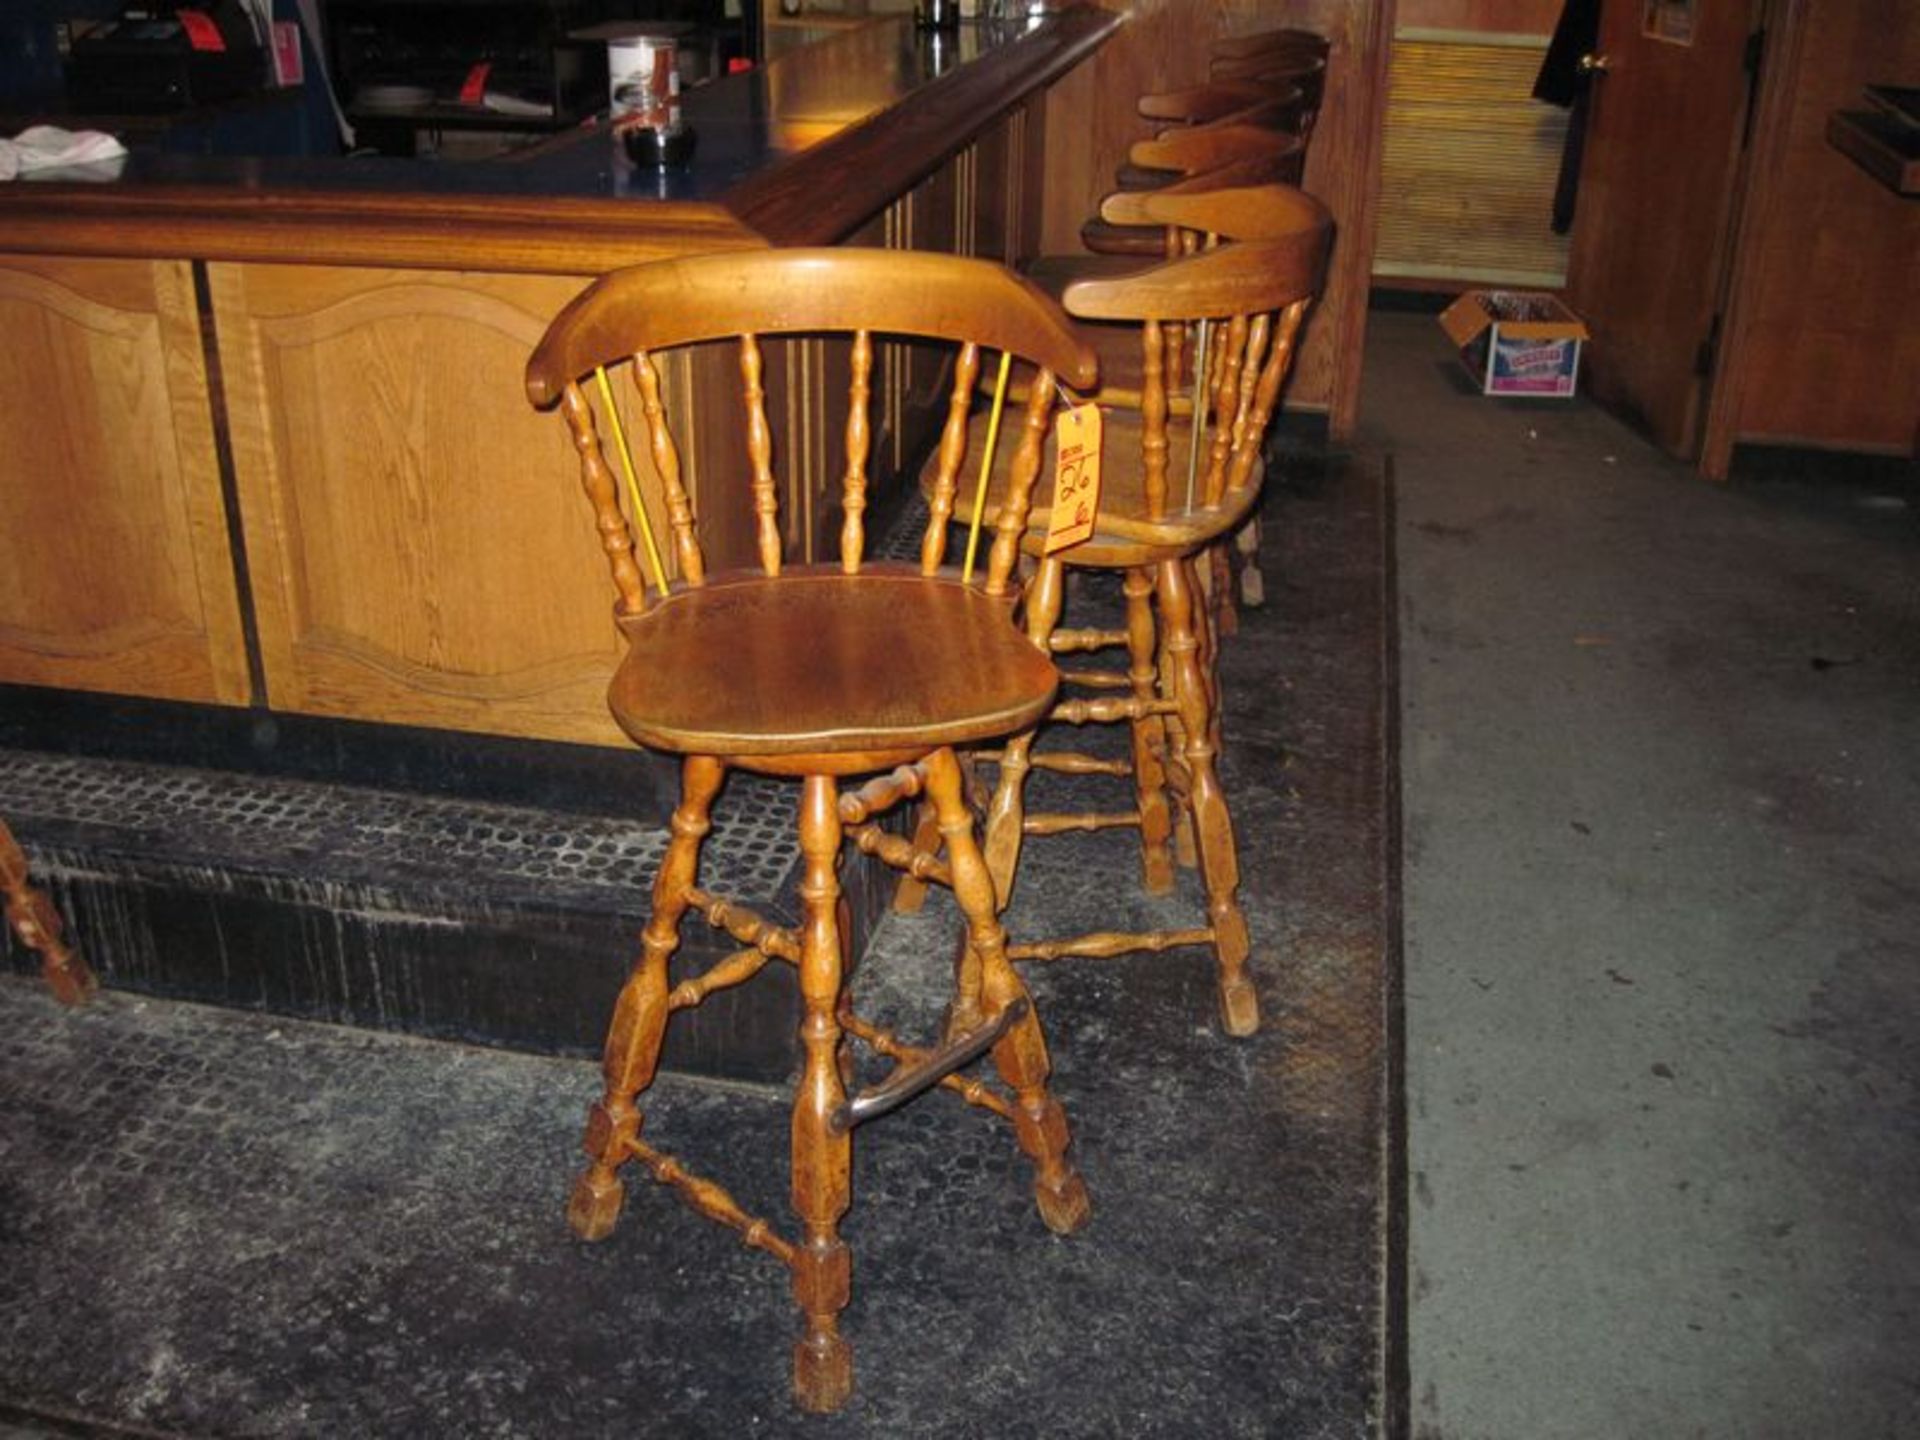 Maple bar stools